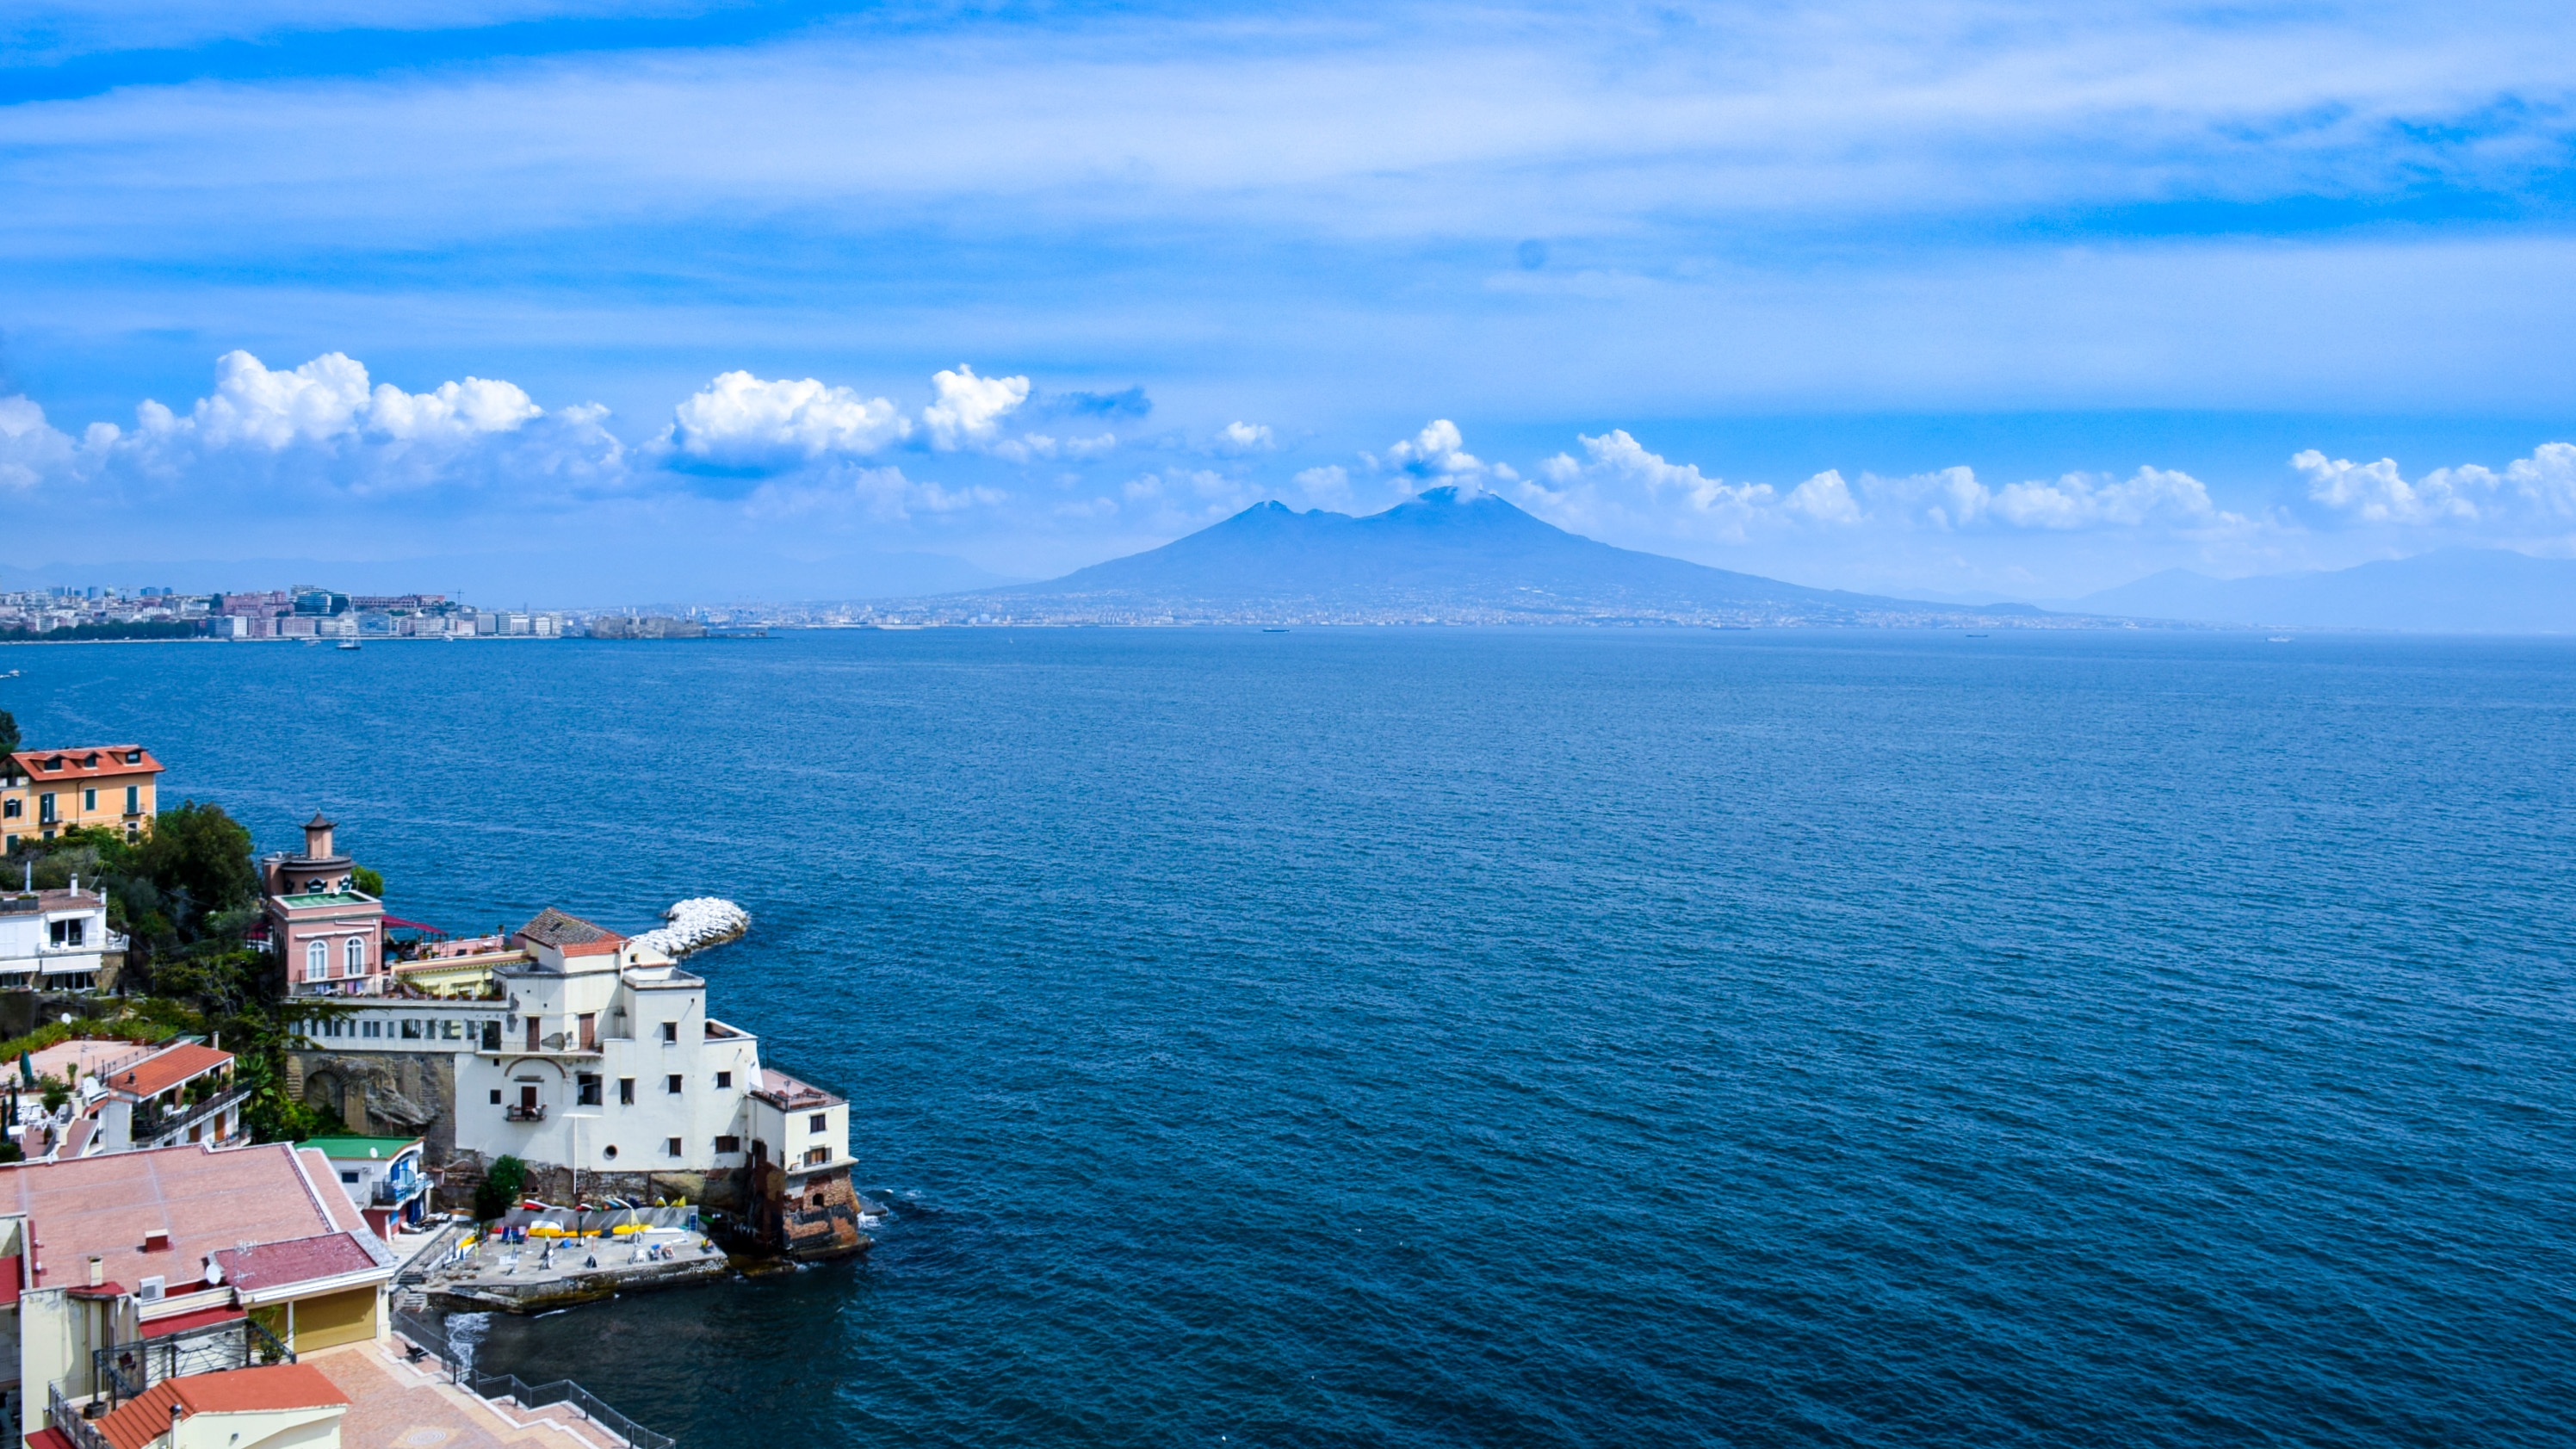 General 2992x1683 Mount Vesuvius Naples Campania landscape Italy sea